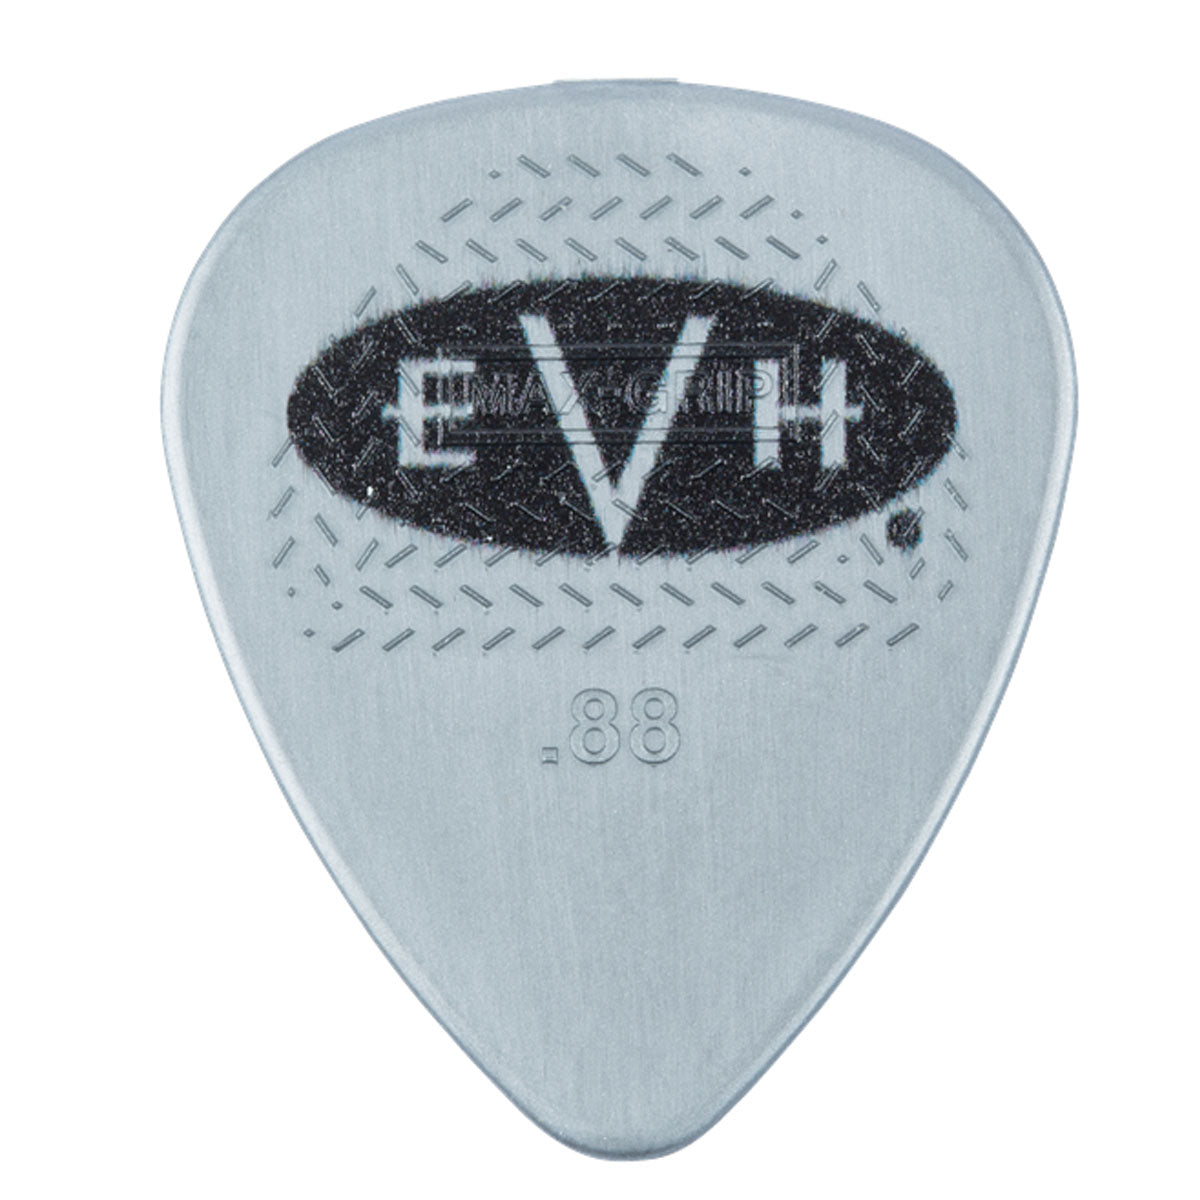 EVH Signature Picks, Gray/Black, .88mm, (6 Pack) - 0221351604